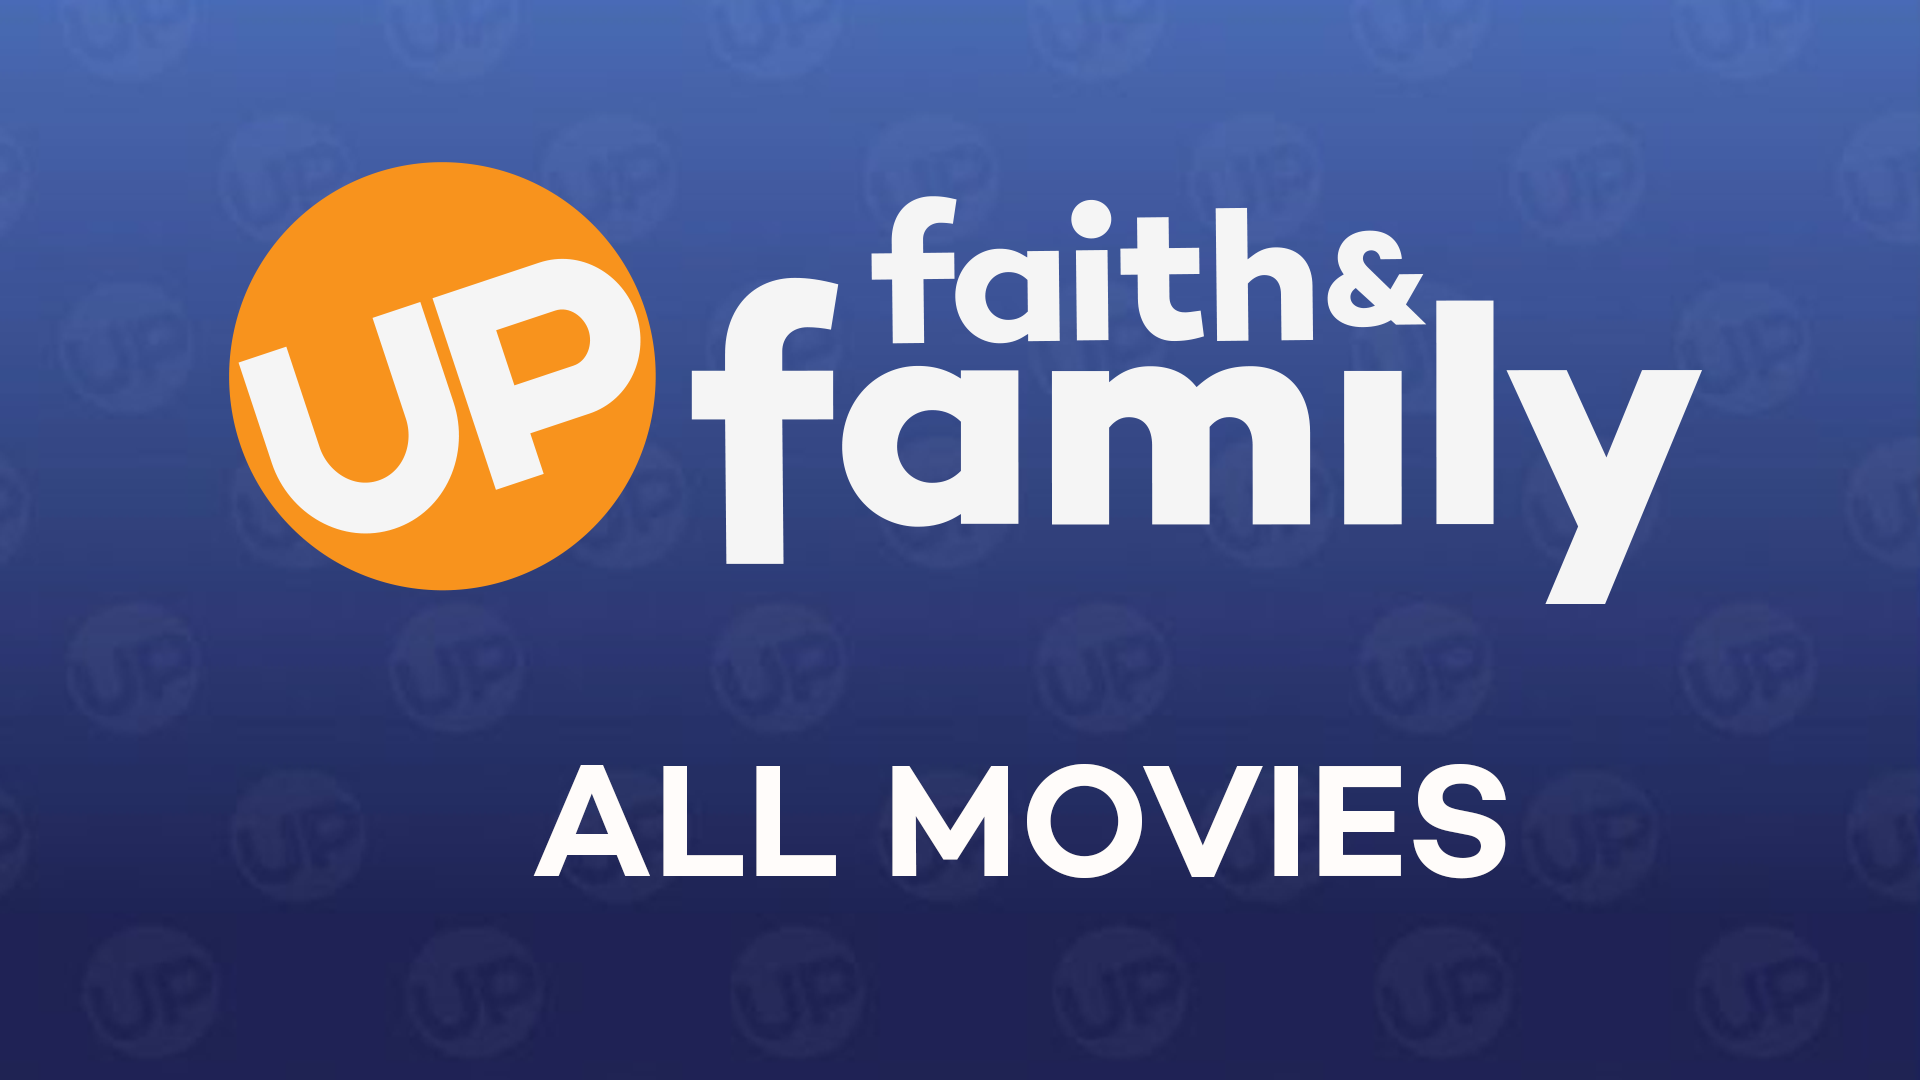 up faith and family movies